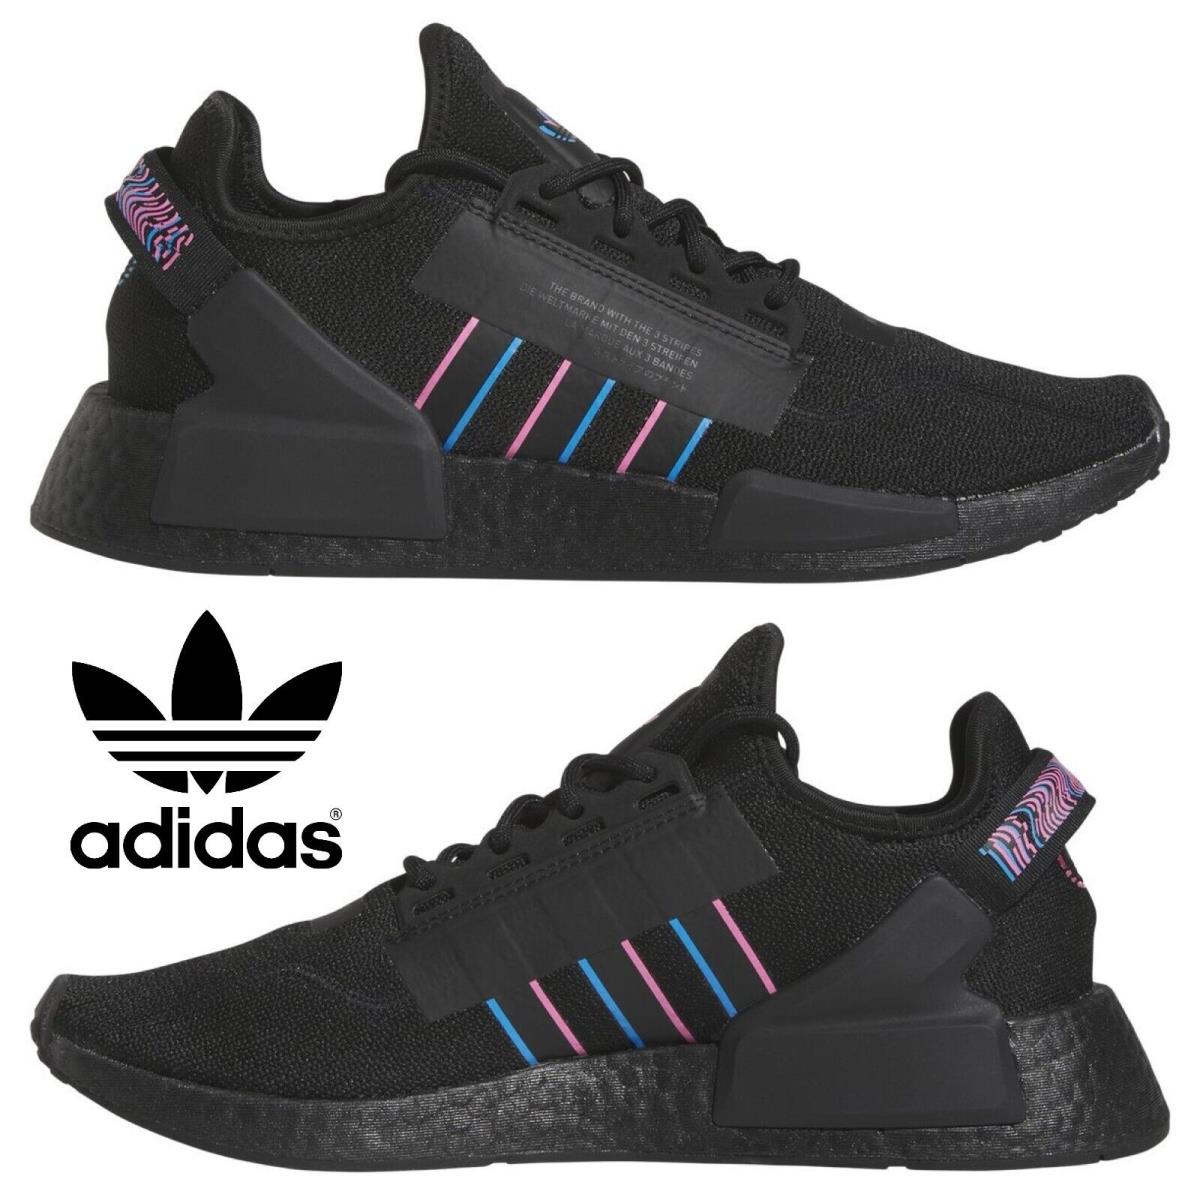 Adidas Originals Nmd R1 Men`s Sneakers Running Shoes Gym Casual Sport Black - Black, Manufacturer: Black